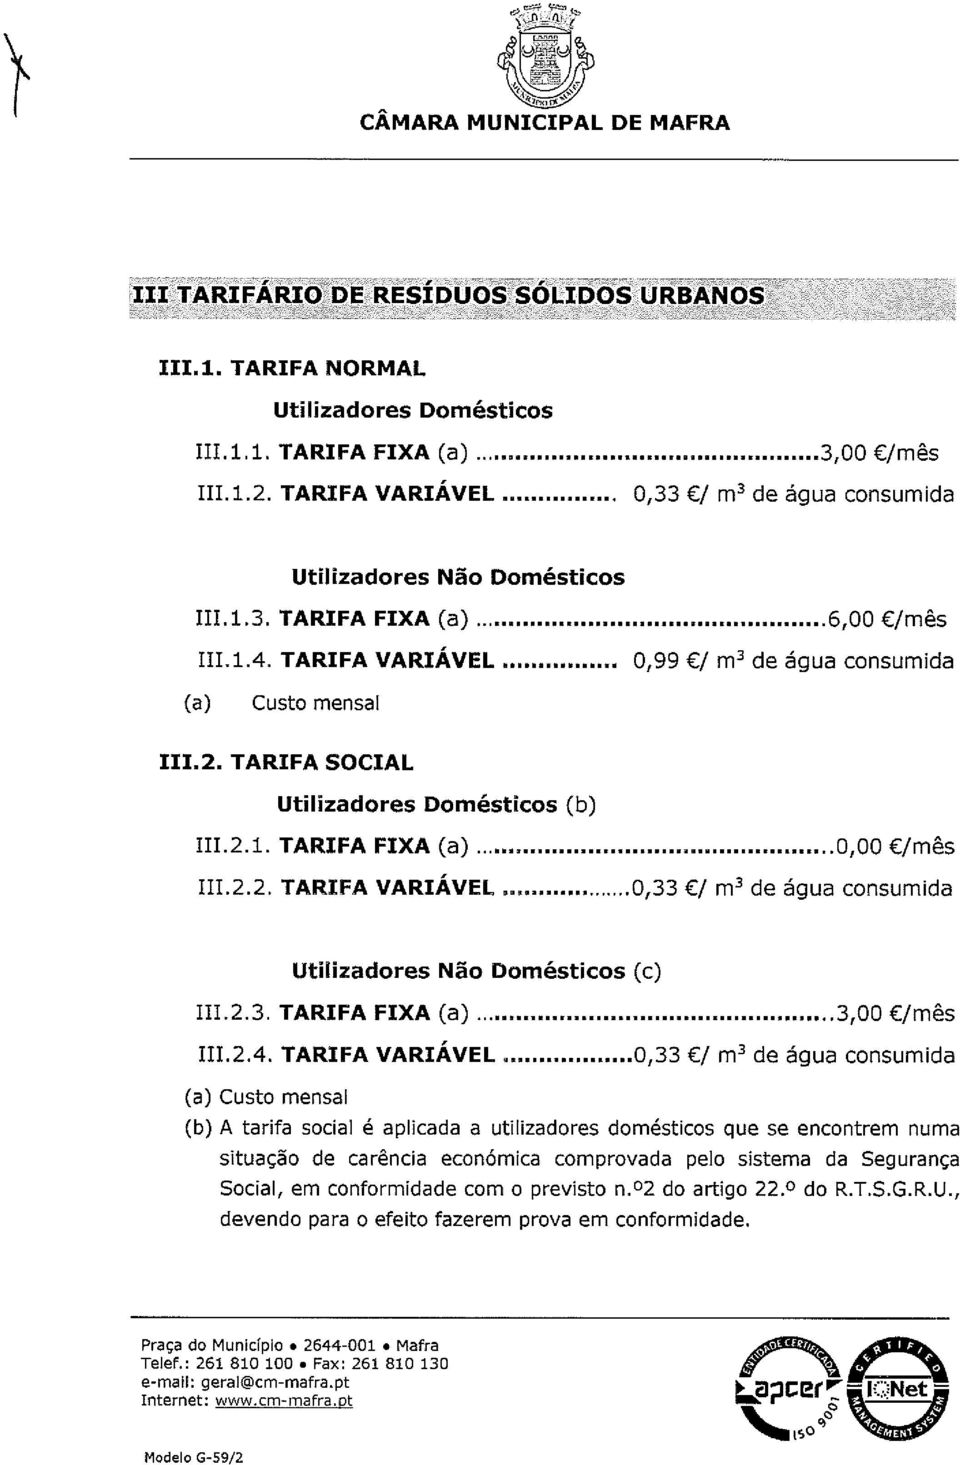 TARIFA SOCIAL Utilizadores Domésticos (b) 111.2.1. TARIFA FIXA (a) 0,00 /mês 111.2.2. TARIFA VARIÁVEL 0,33 1 m3 de água consumida Utilizadores Não Domésticos (c) 111.2.3. TARIFA FIXA (a) 3,00 /mês 111.